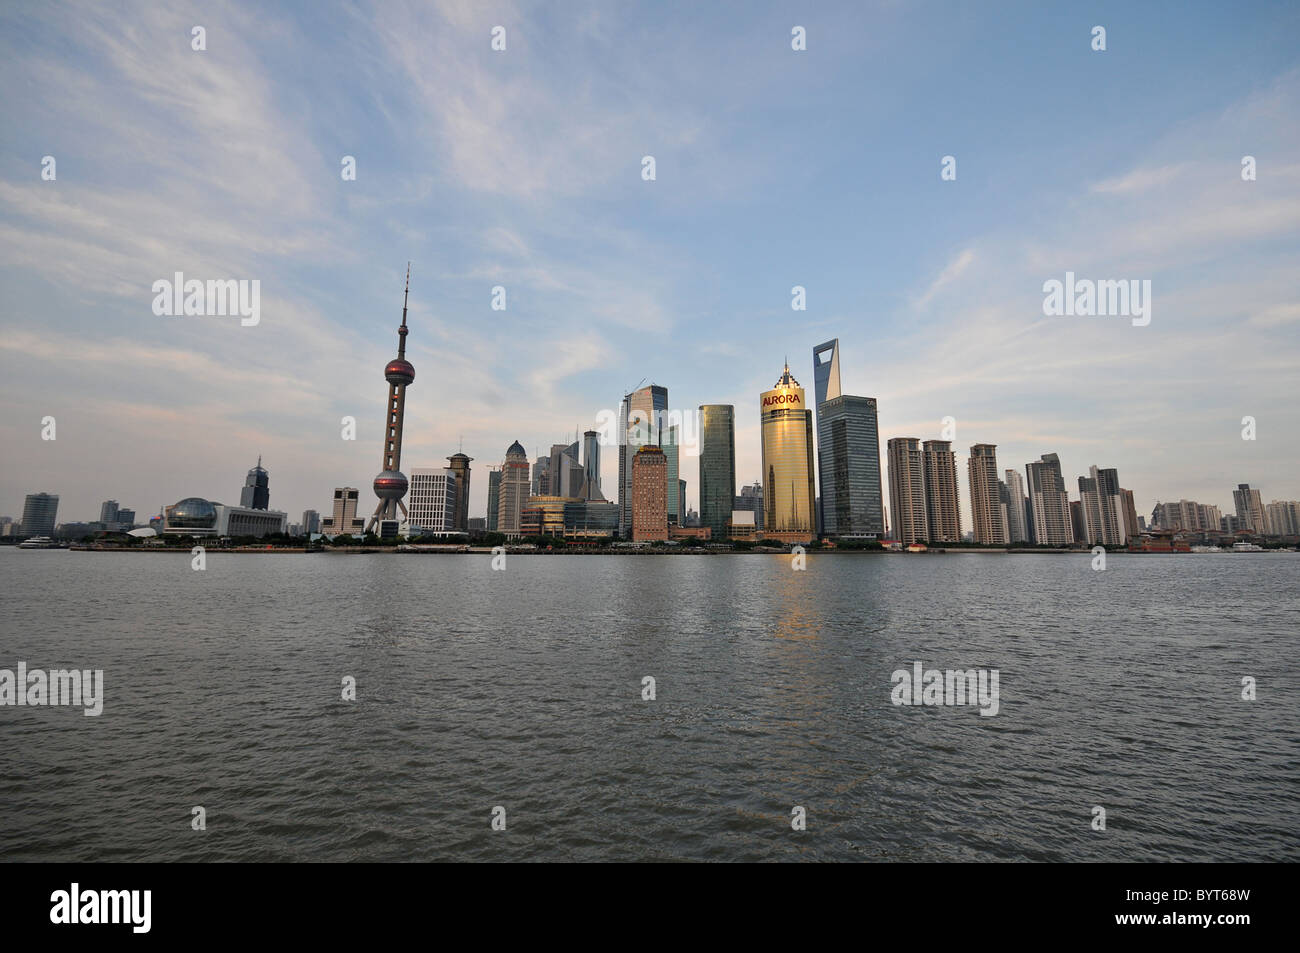 Shanghai skyline buildings across the Huangpu river Stock Photo